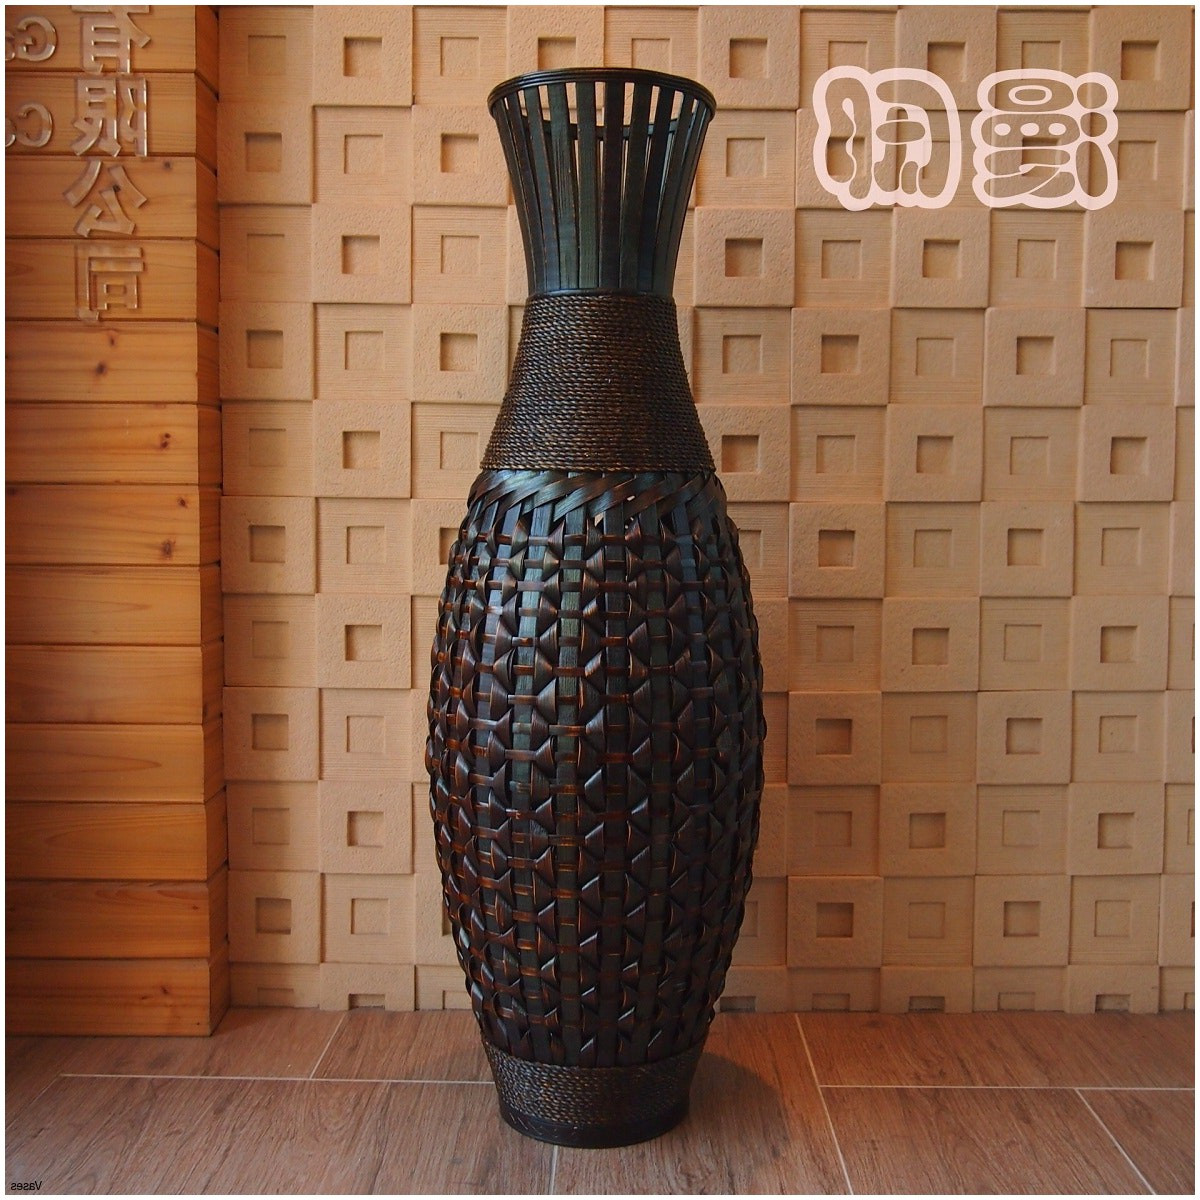 How to Make A Large Floor Vase Of 21 Beau Decorative Vases Anciendemutu org Intended for Mesmerizing Wicker Floor Vase 107 Vases Uk Cheap Saleh Sale Fulli 0d